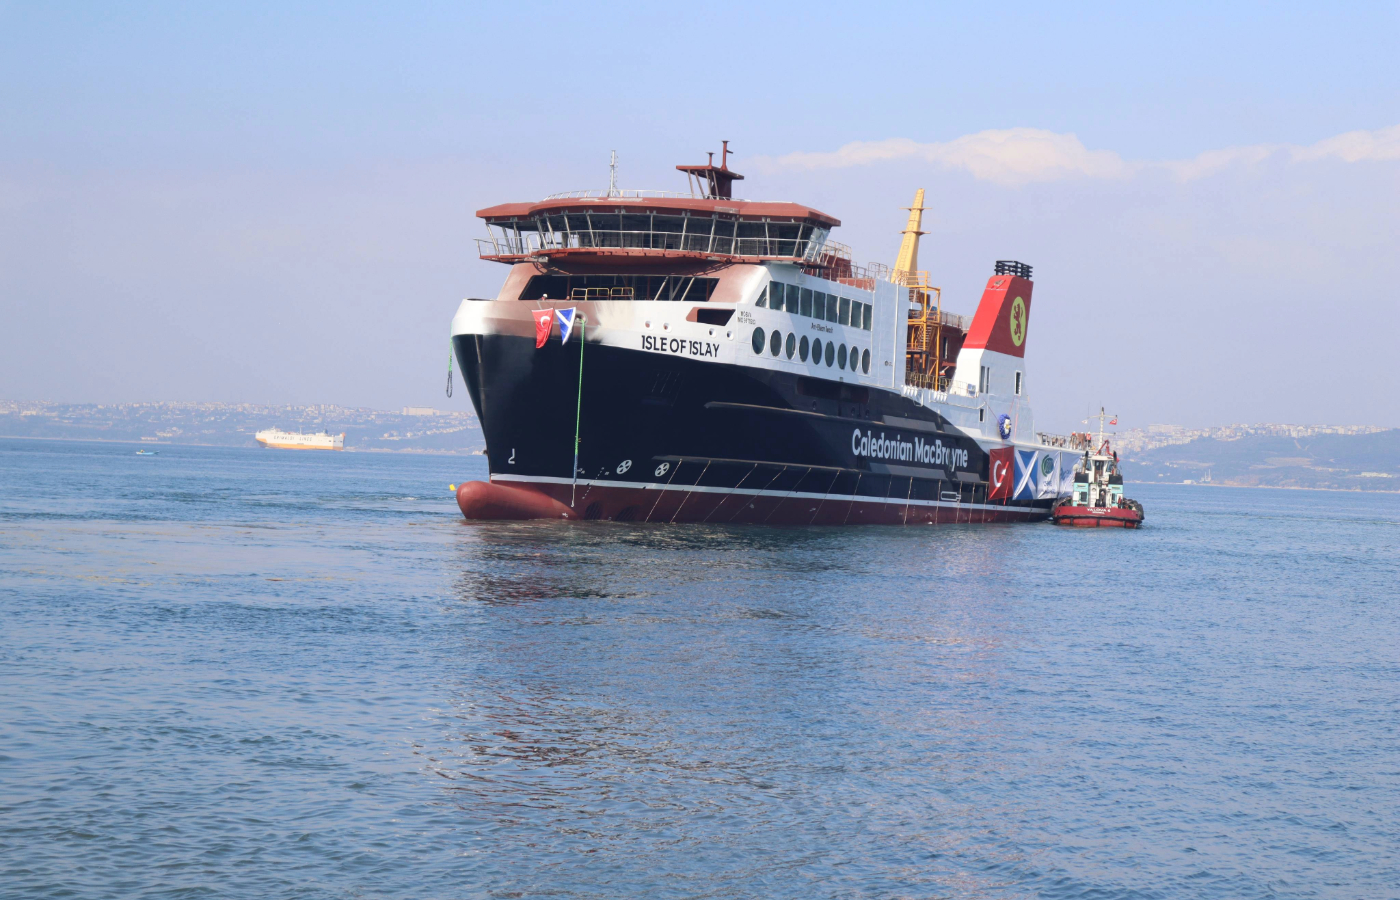 MV Isle of Islay successfully launches at the Cemre Marin Endustri shipyard in Yalova, Turkey.